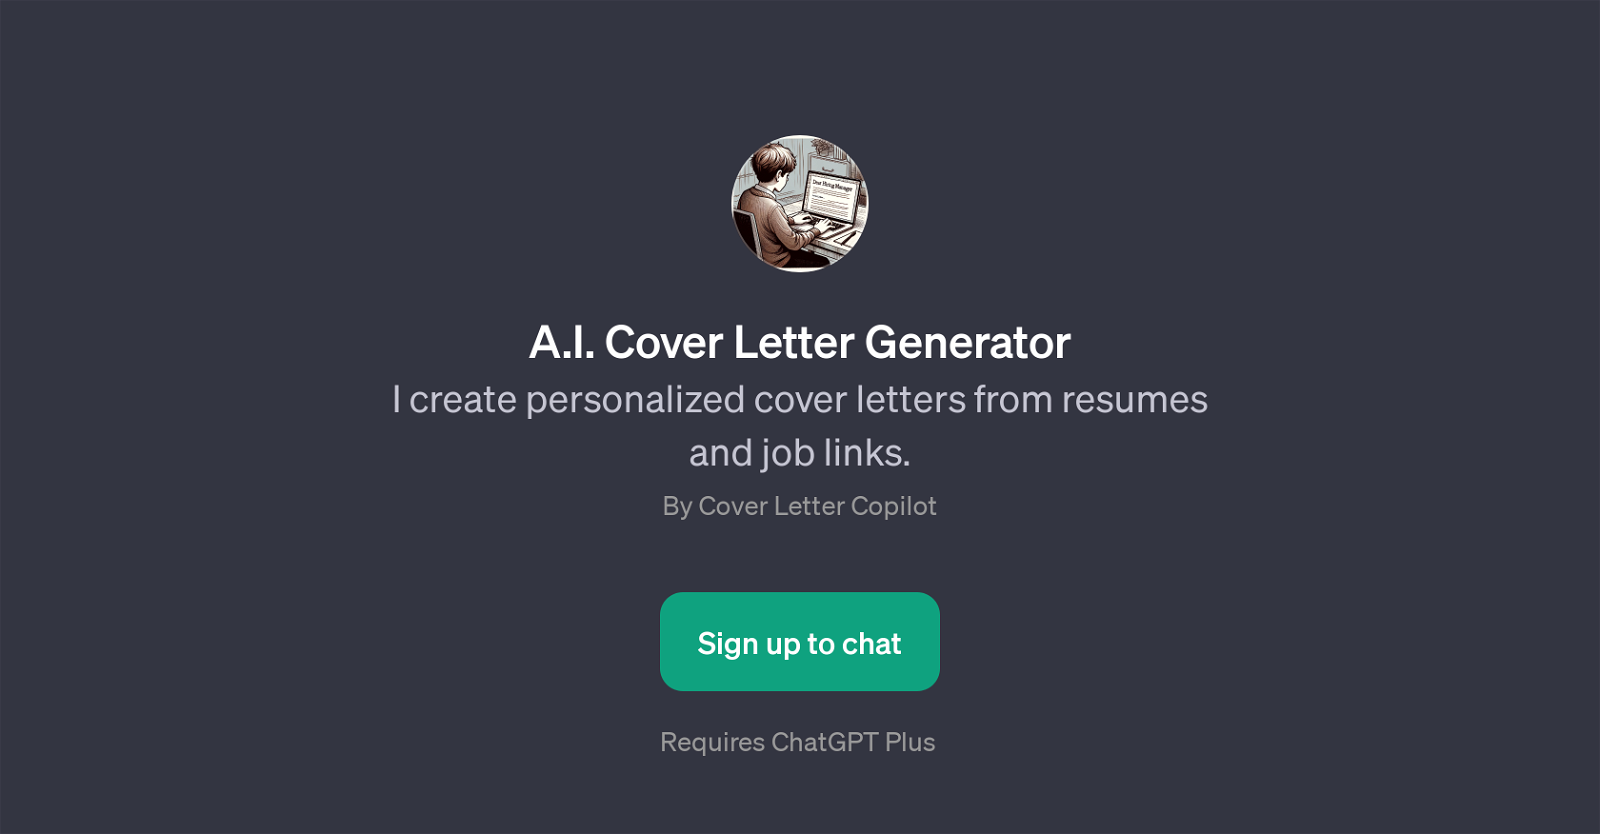 A.I. Cover Letter Generator website